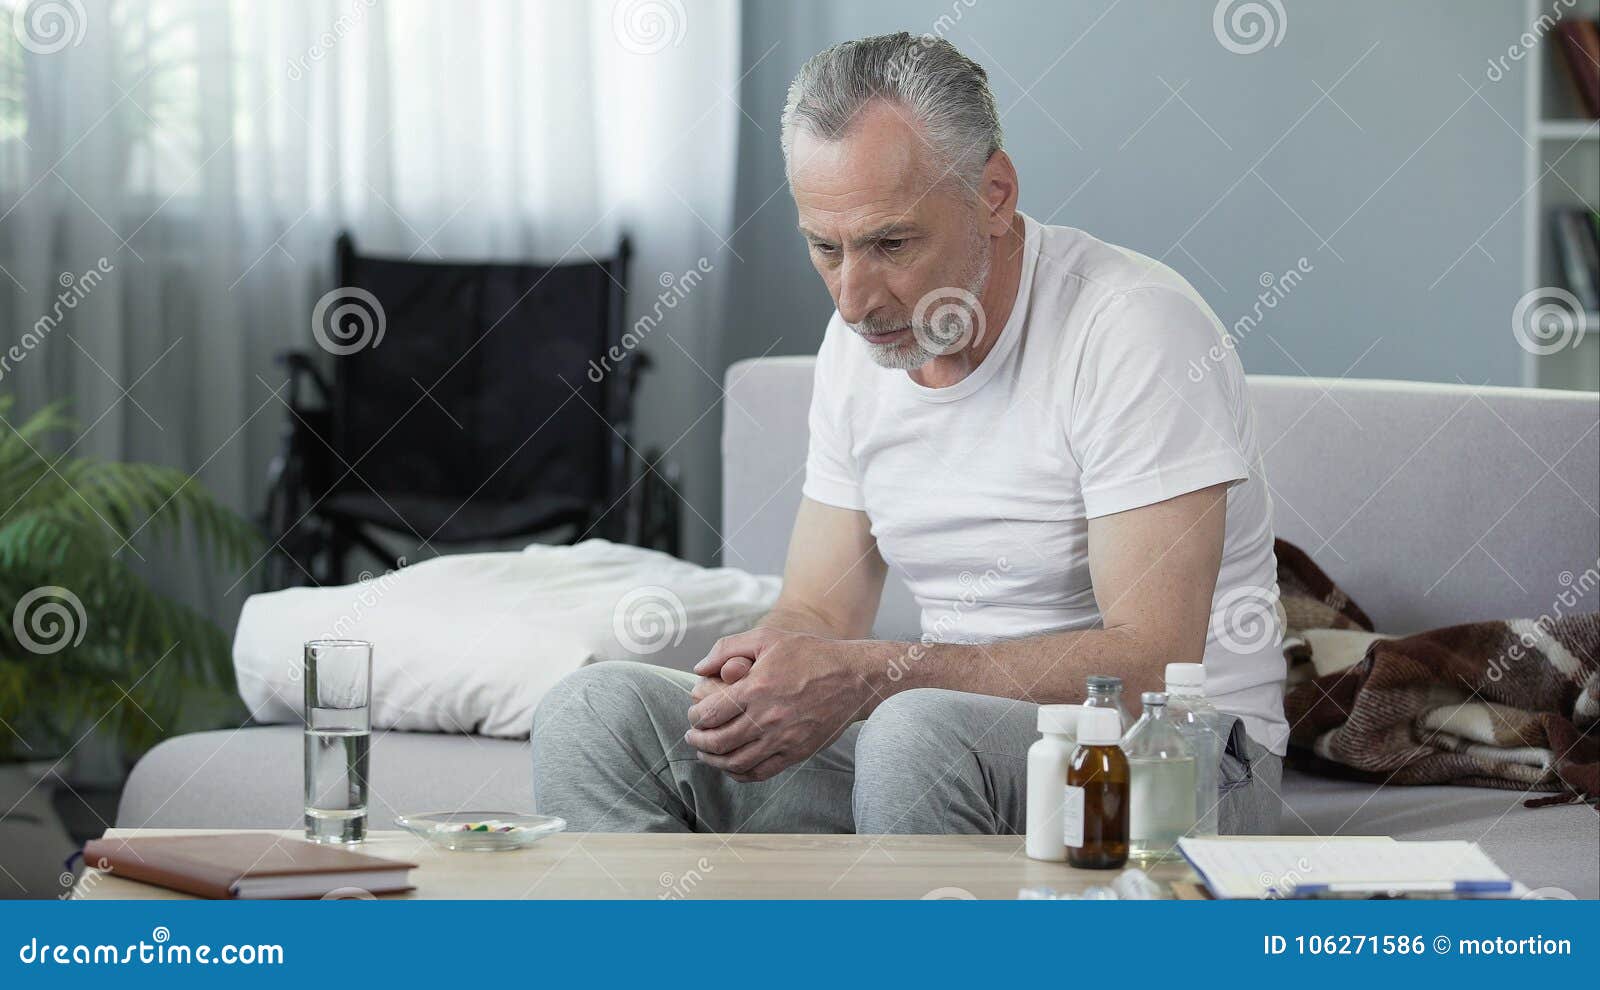 depressed senior male sitting on sofa at nursing home, loneliness and melancholy